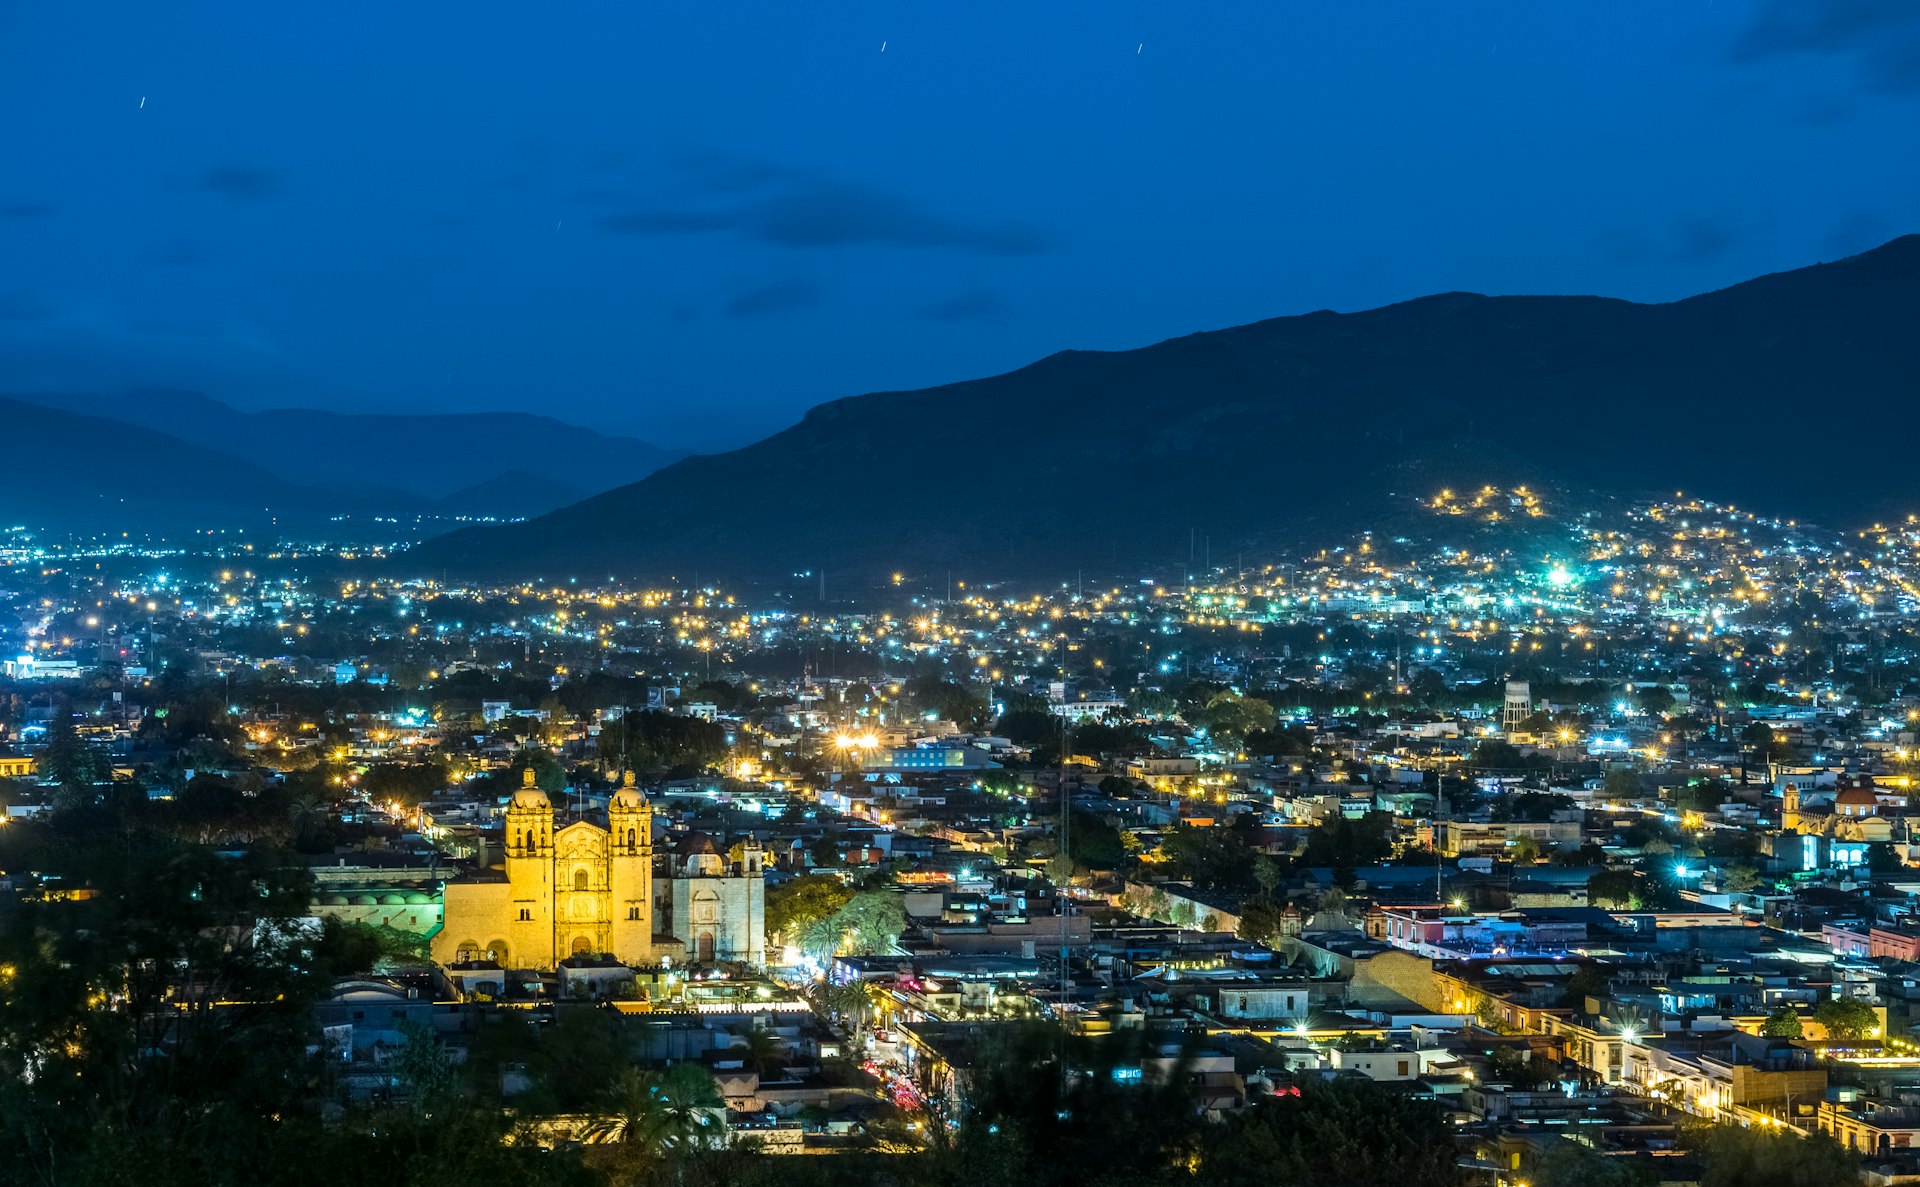 Historic centre of Oaxaca city lit up at night with its landmark Santo Domingo church